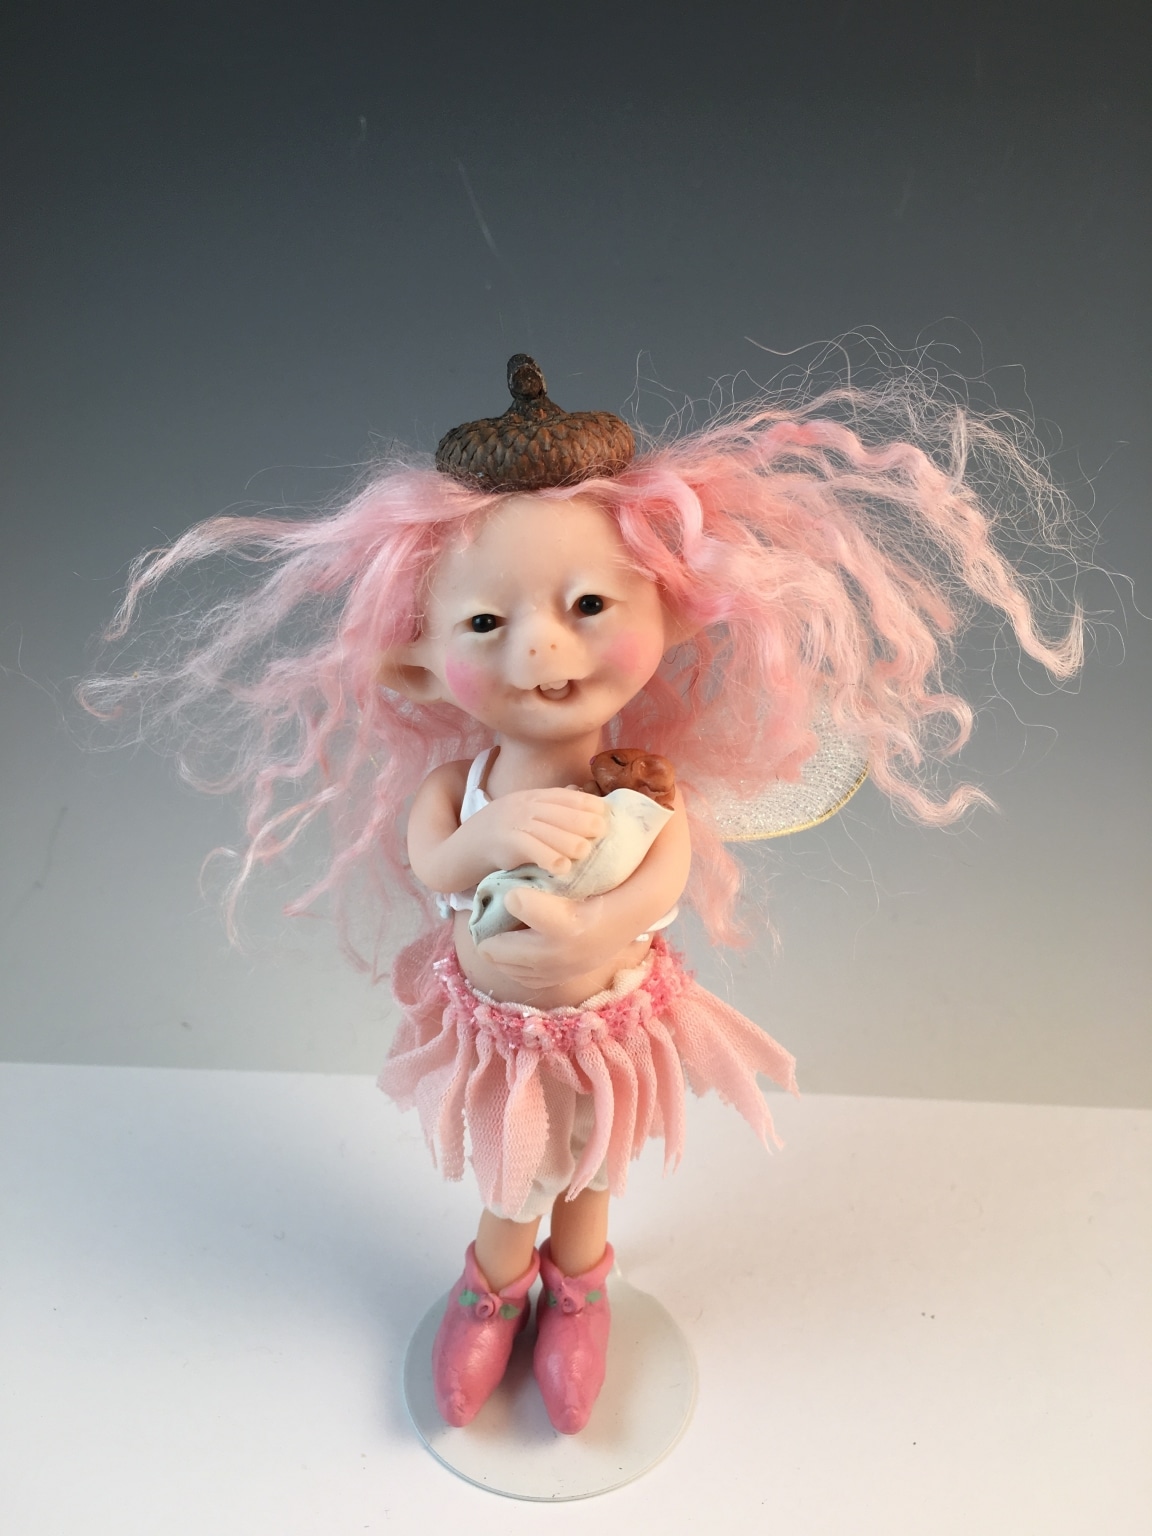 Cooper Dolls – Exclusive Handmade Dolls, Santa's and Fairies – Since 1980